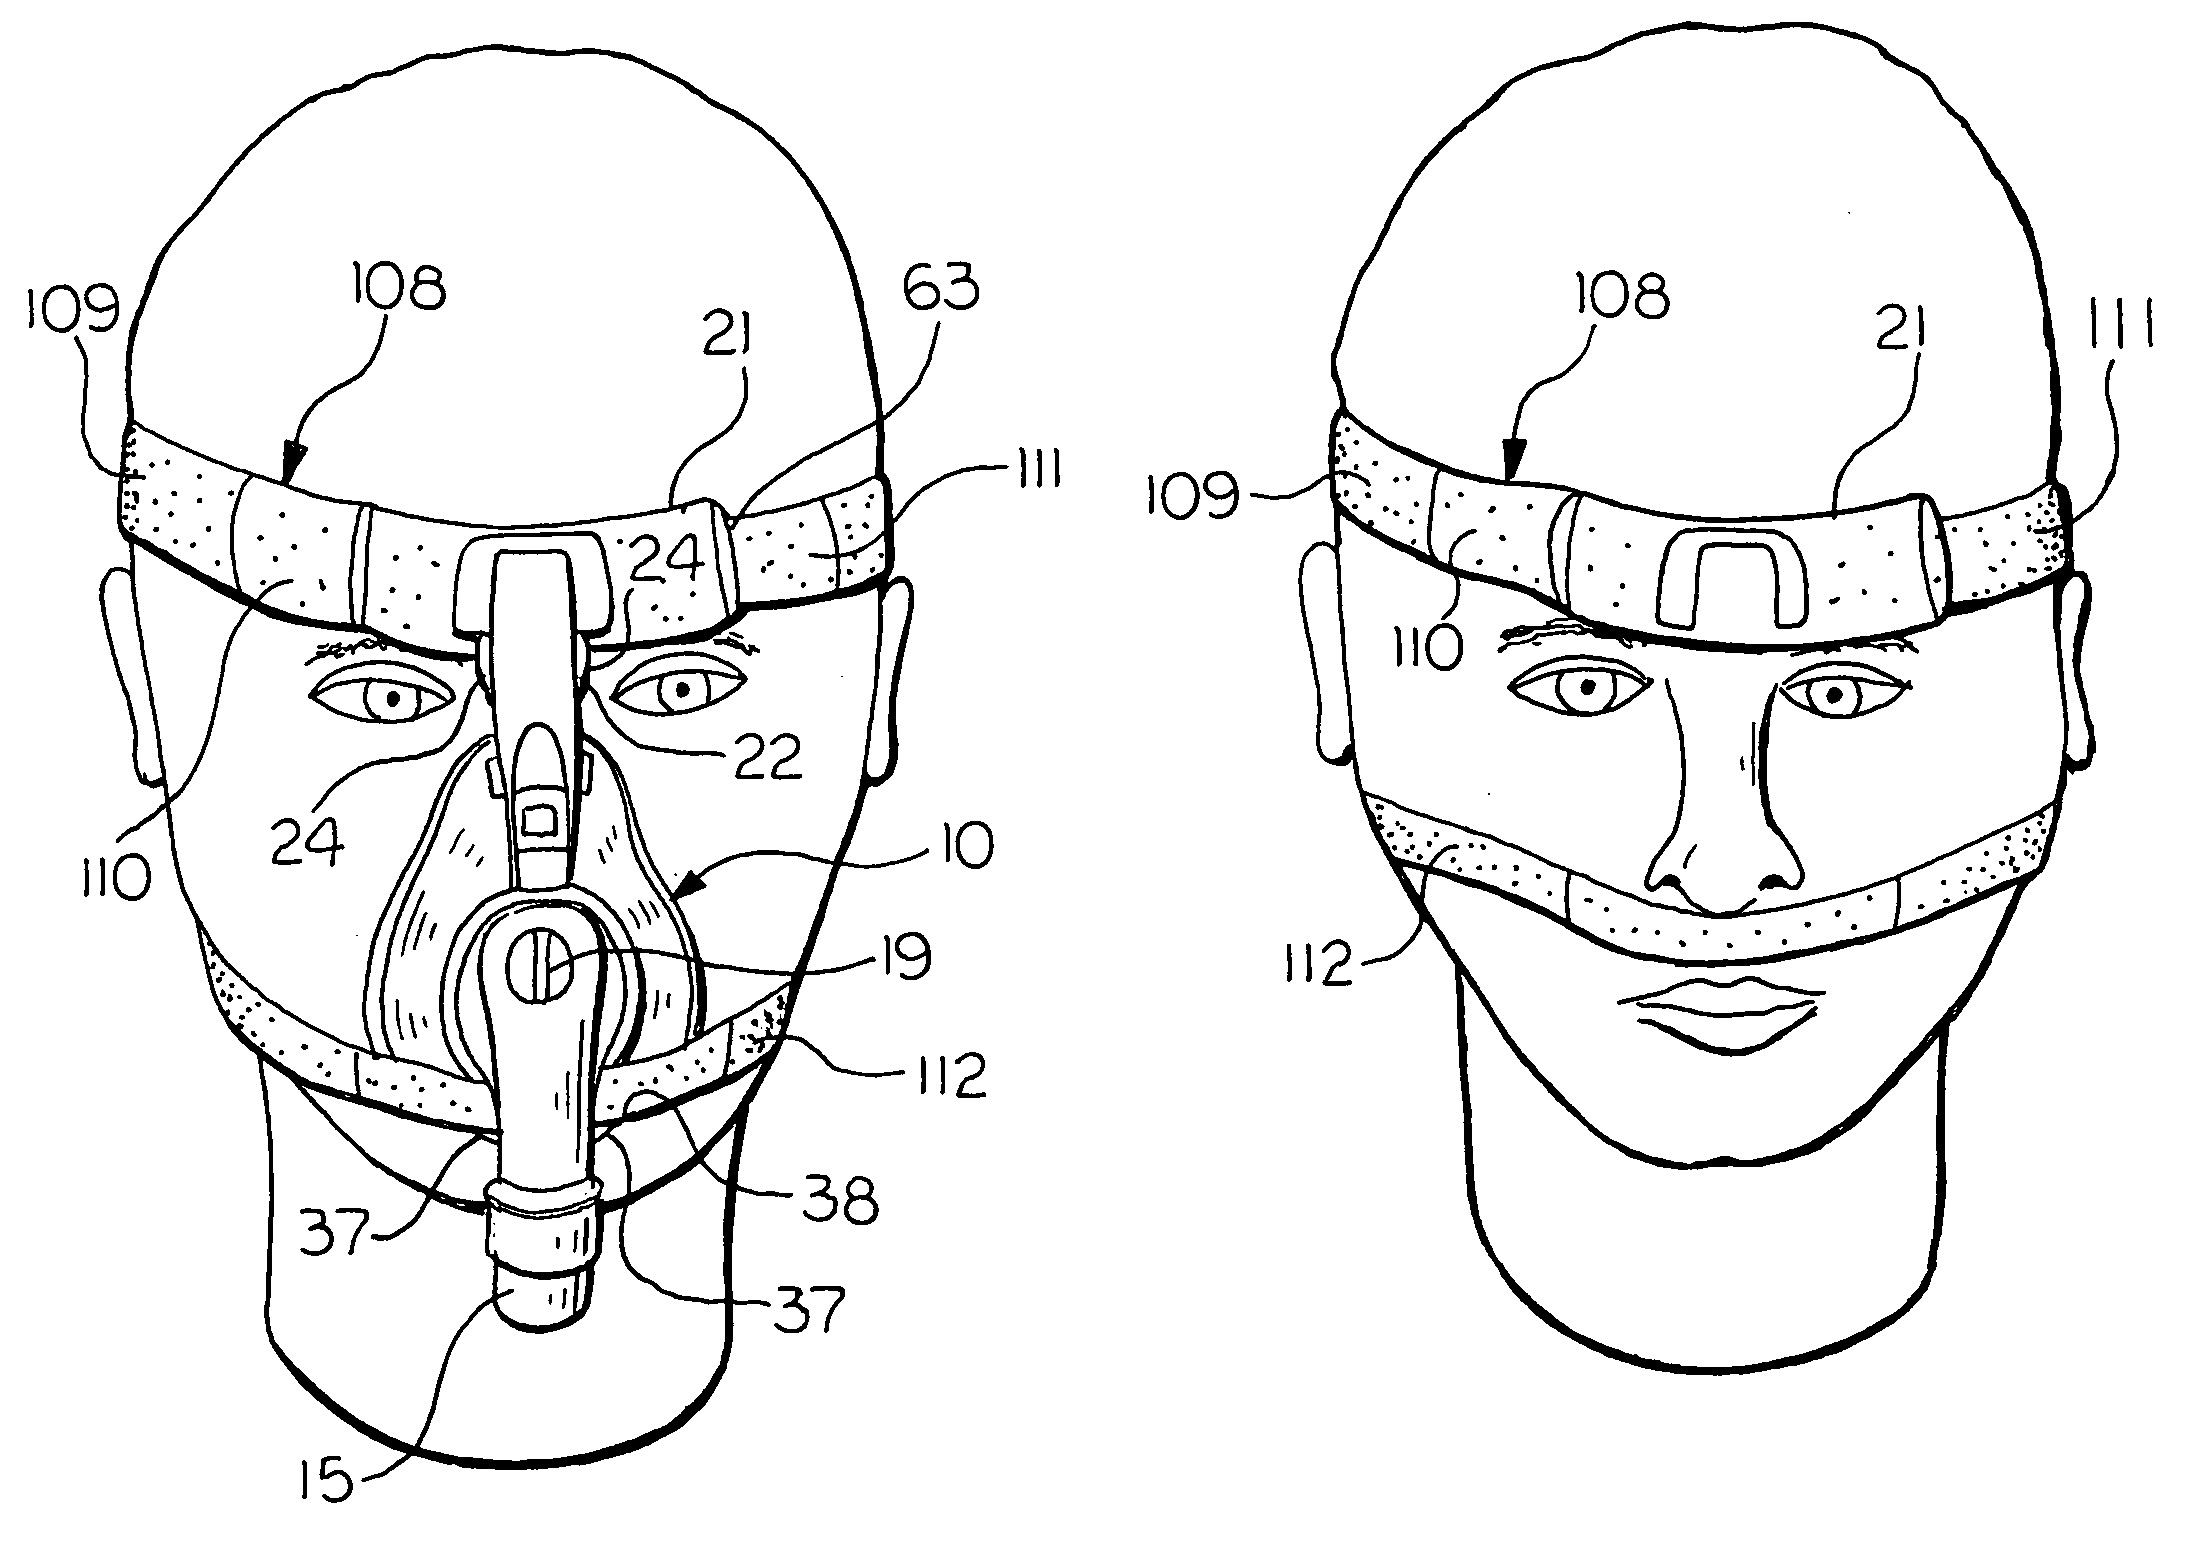 Method for securing a nasal mask